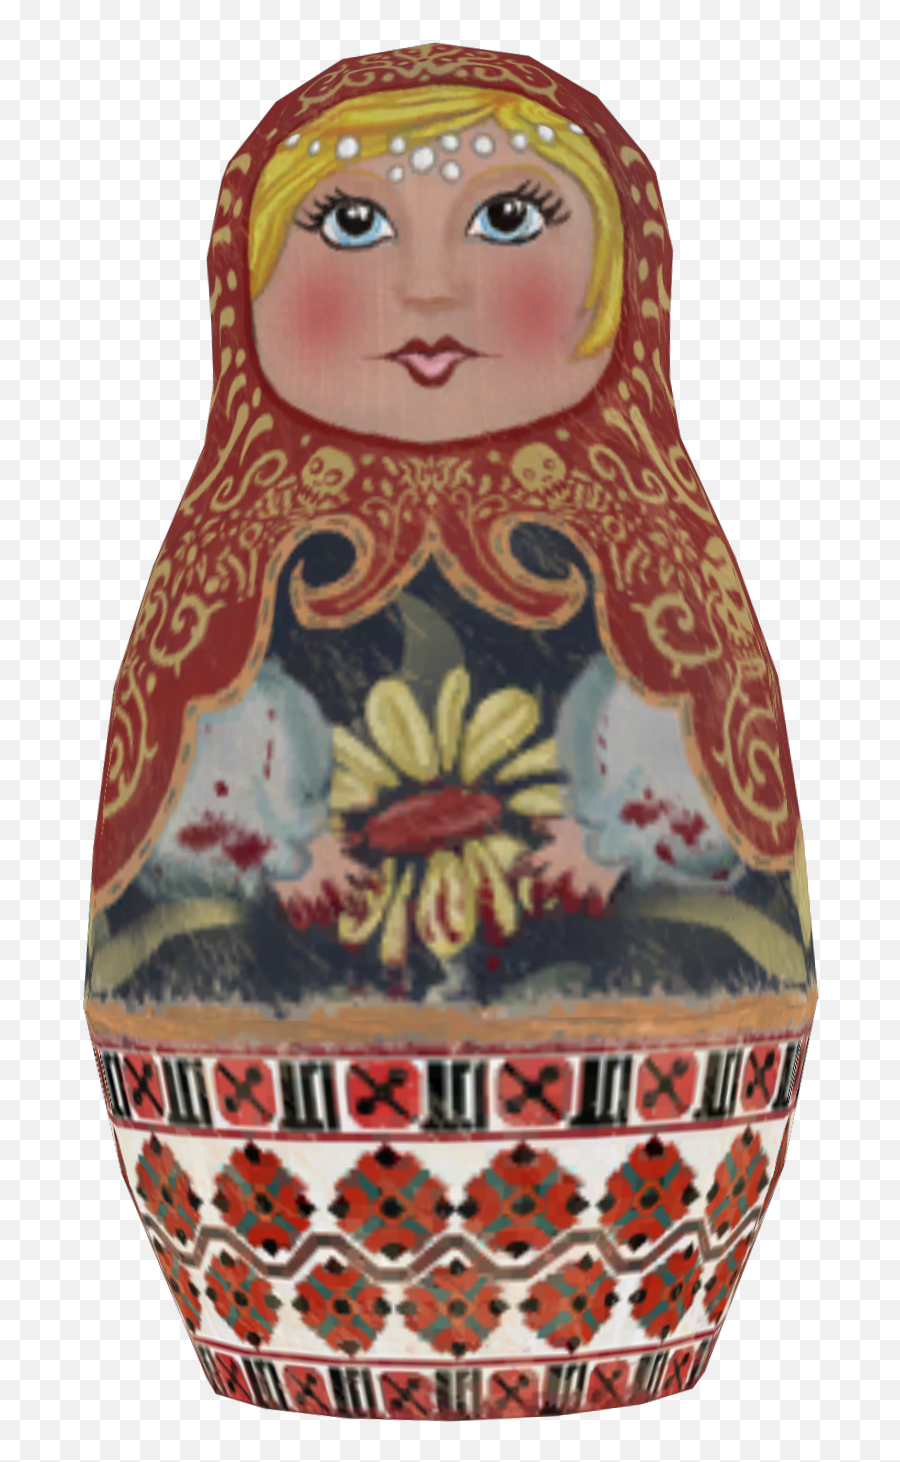 Matryoshka Doll - Matryoshka Doll Cod Emoji,Emoji Knife And Russian Wooden Doll